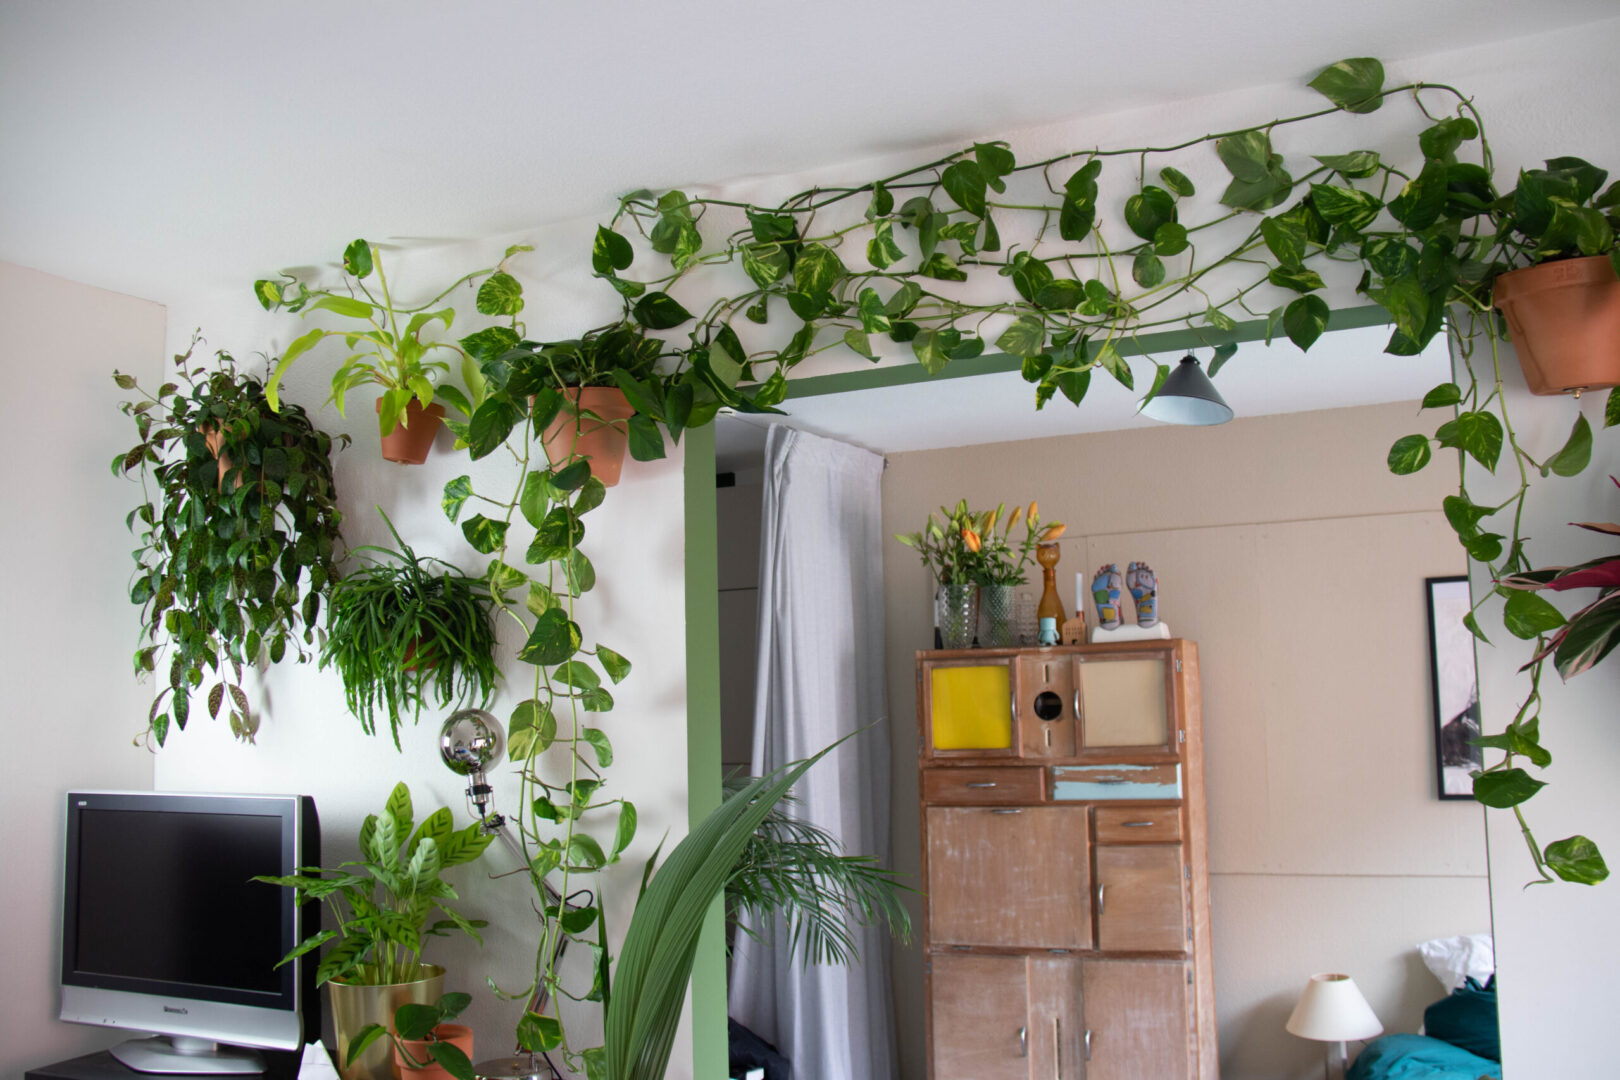 How long do hanging plants last?